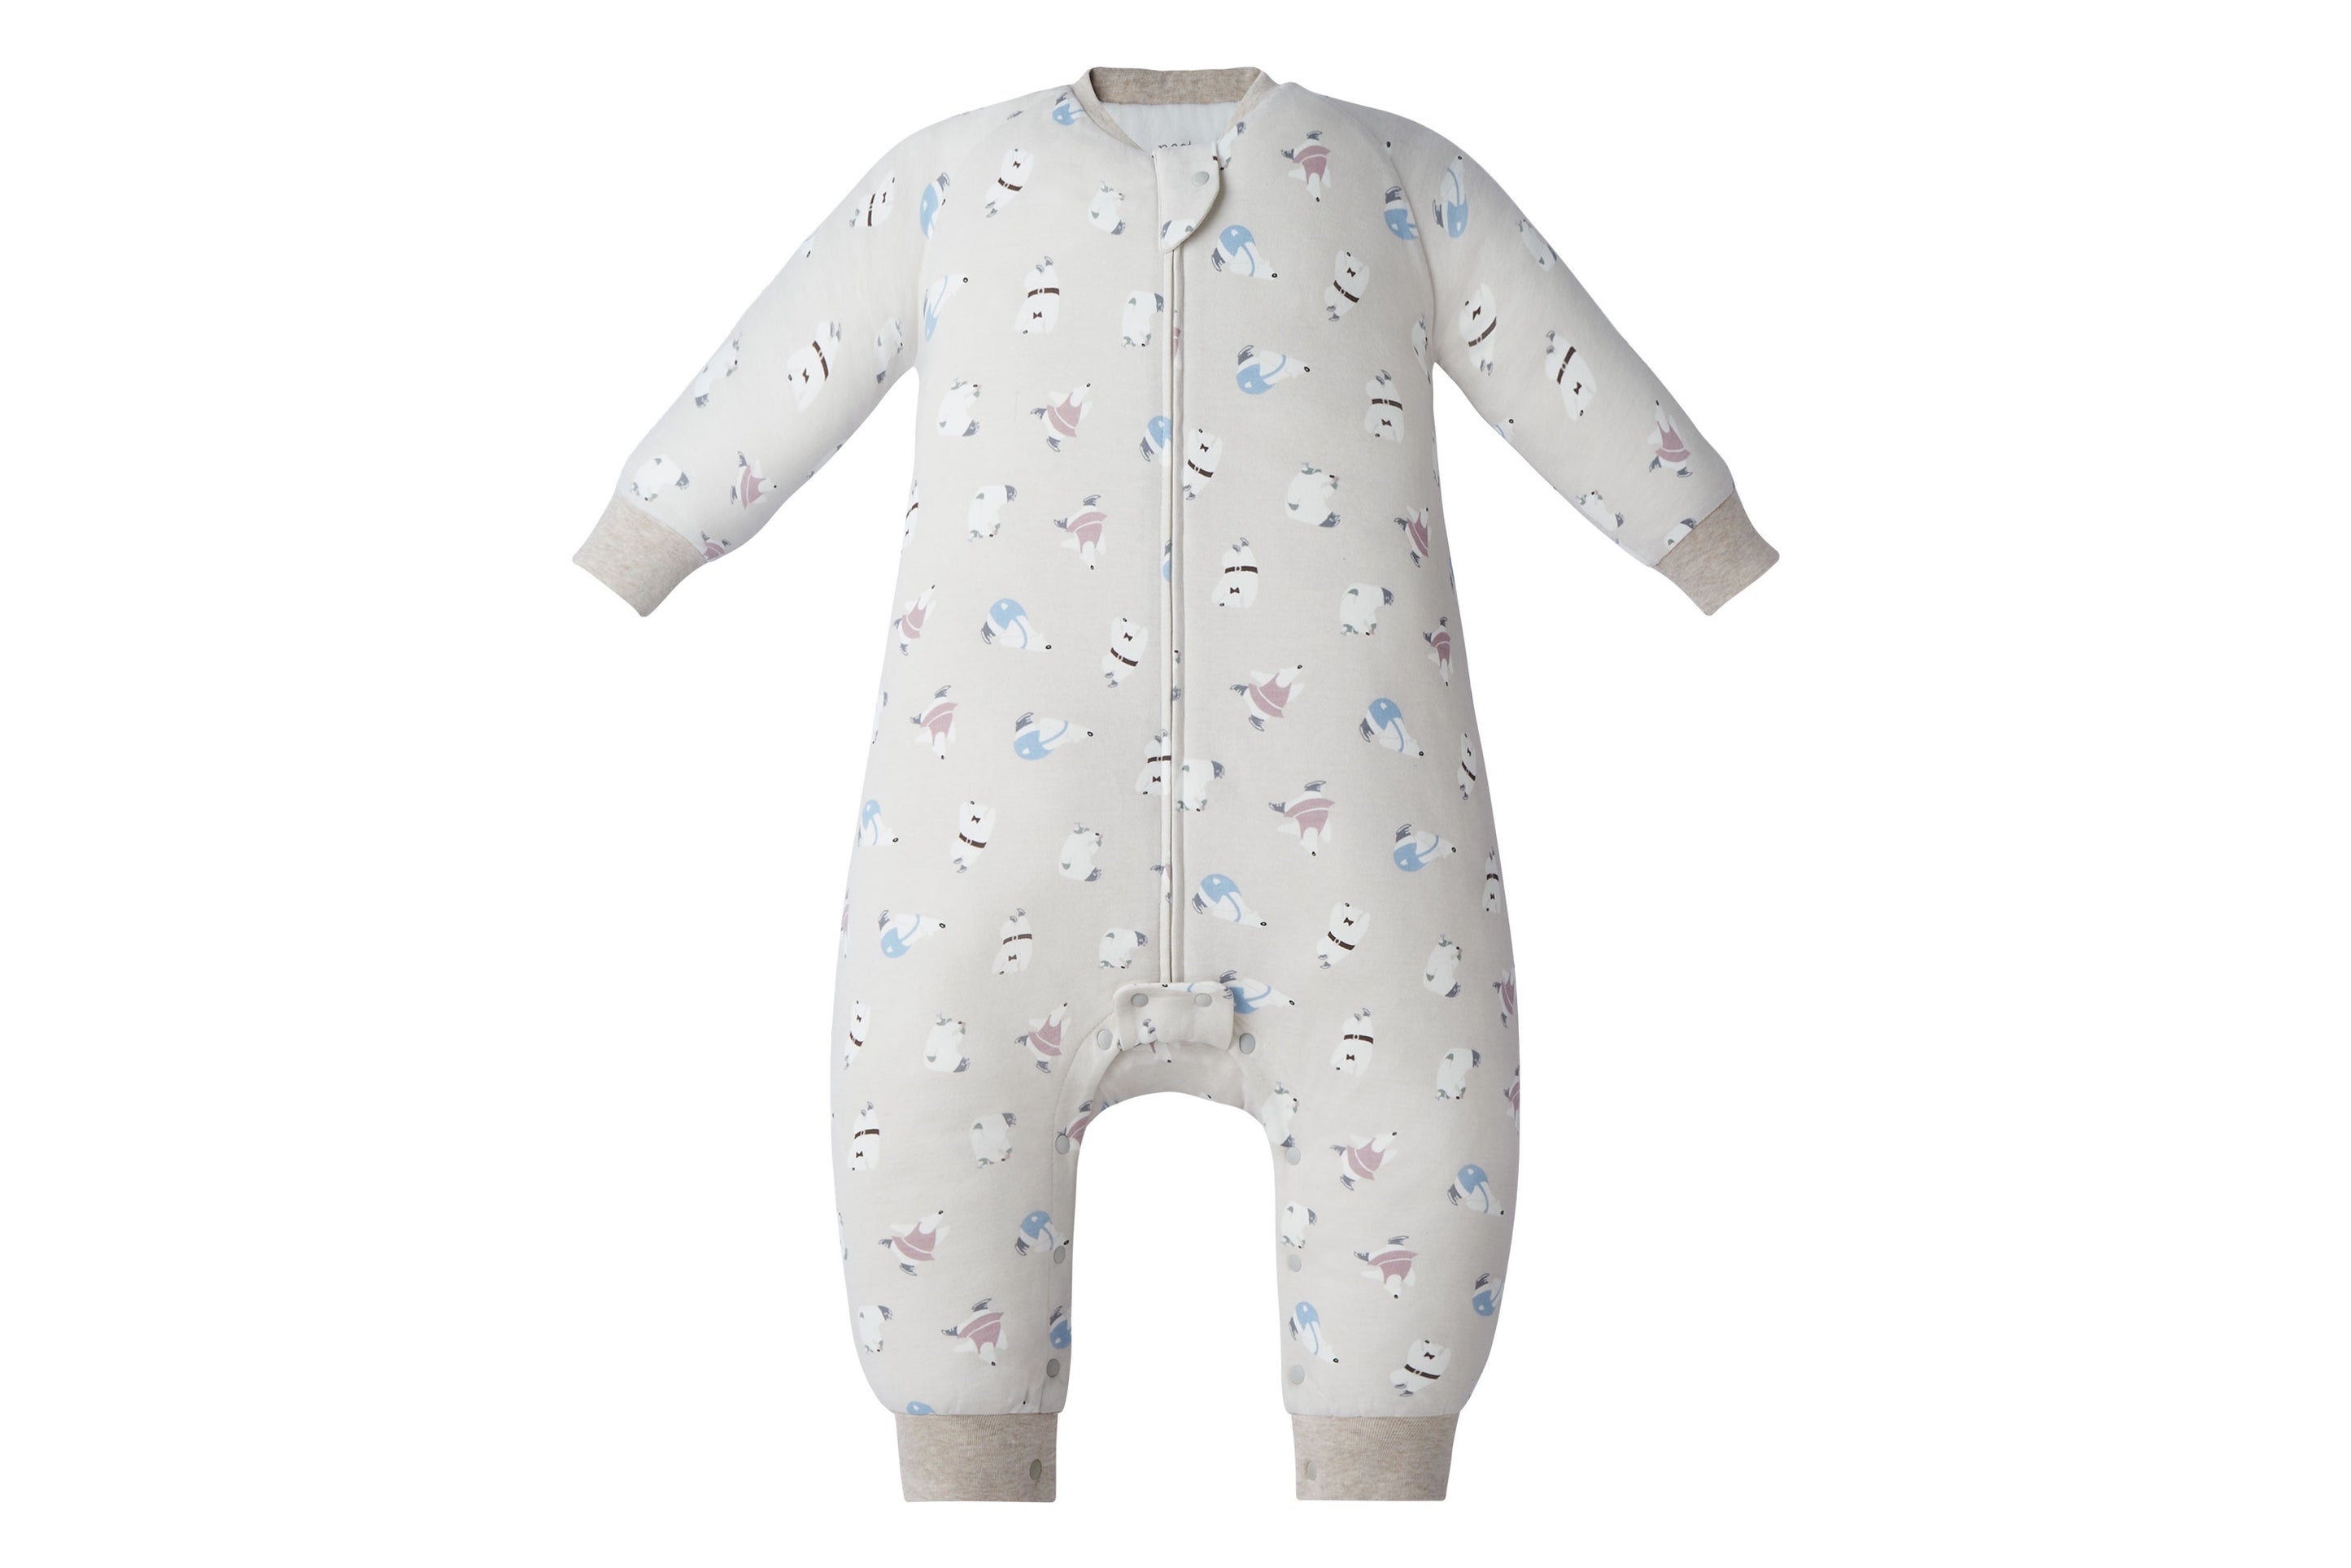 Nest Designs | Premium Sleepwear & Apparel for Babies, Kids & Adults